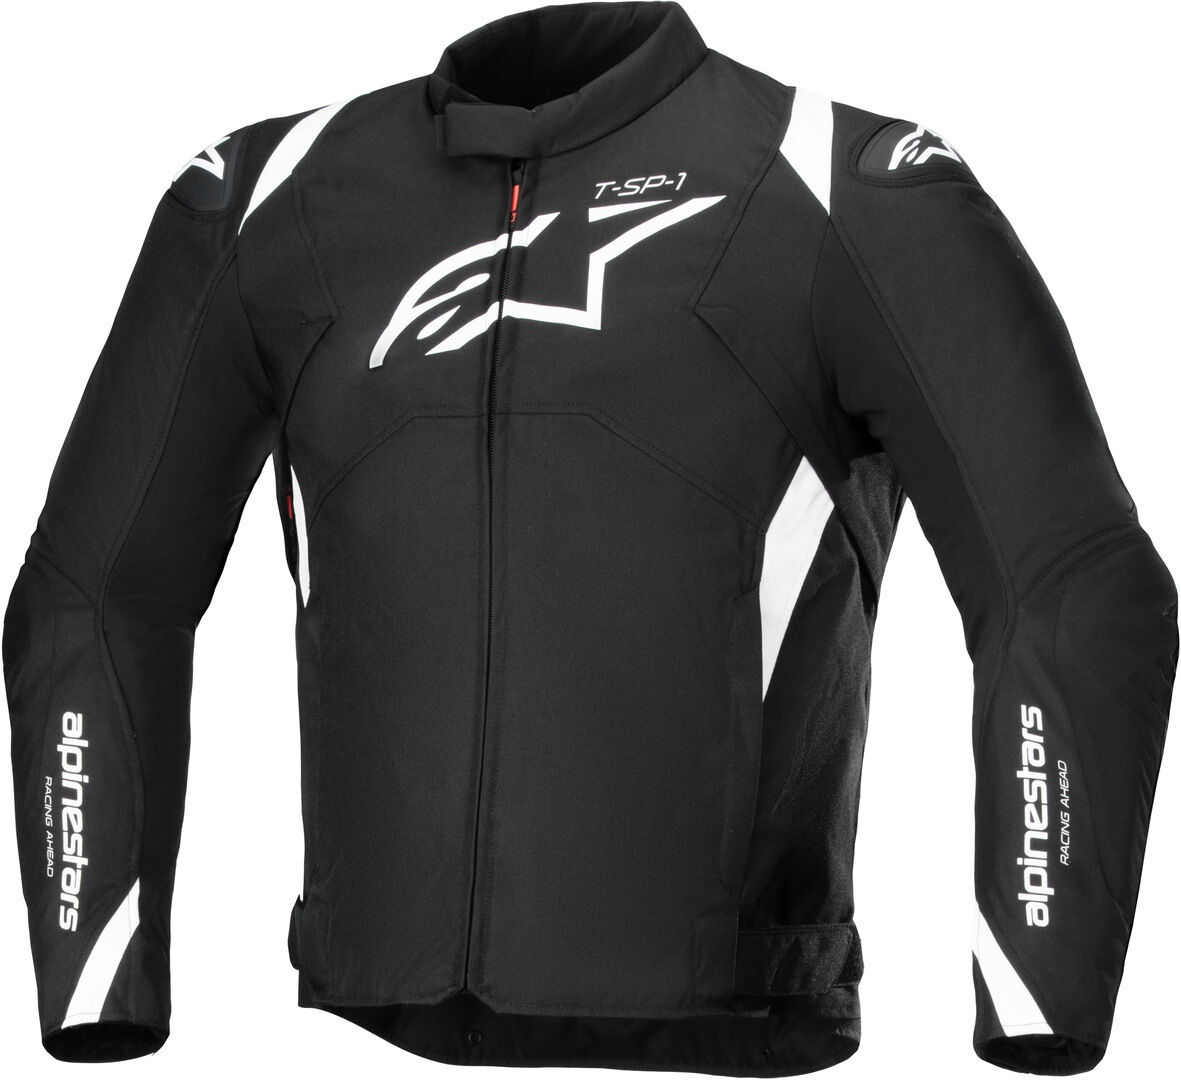 Alpinestars T-SP 1 V2 chaqueta textil impermeable para motocicletas - Negro Blanco (L)